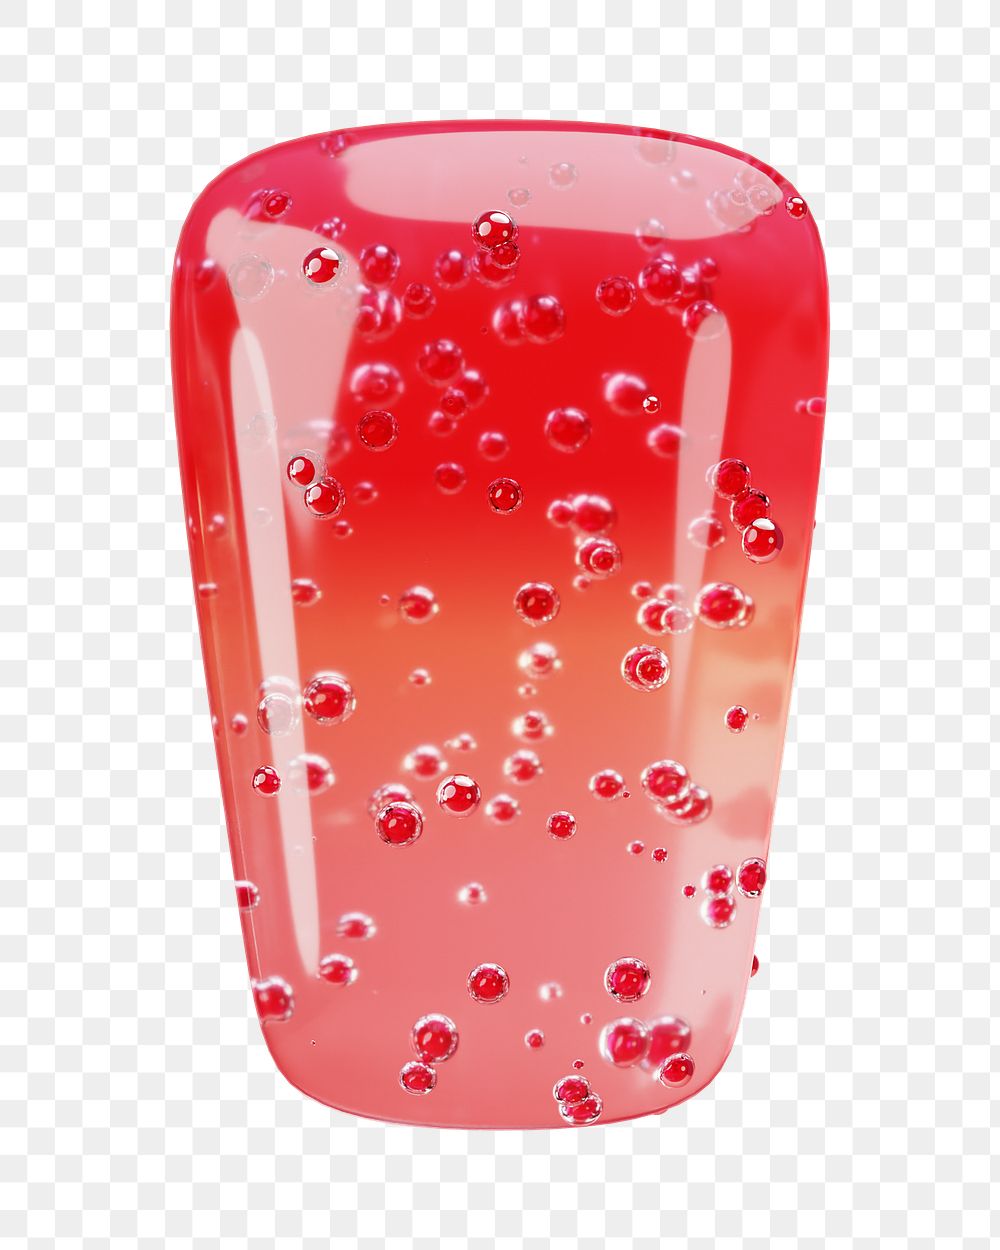 Prime sign png 3D red jelly symbol, transparent background